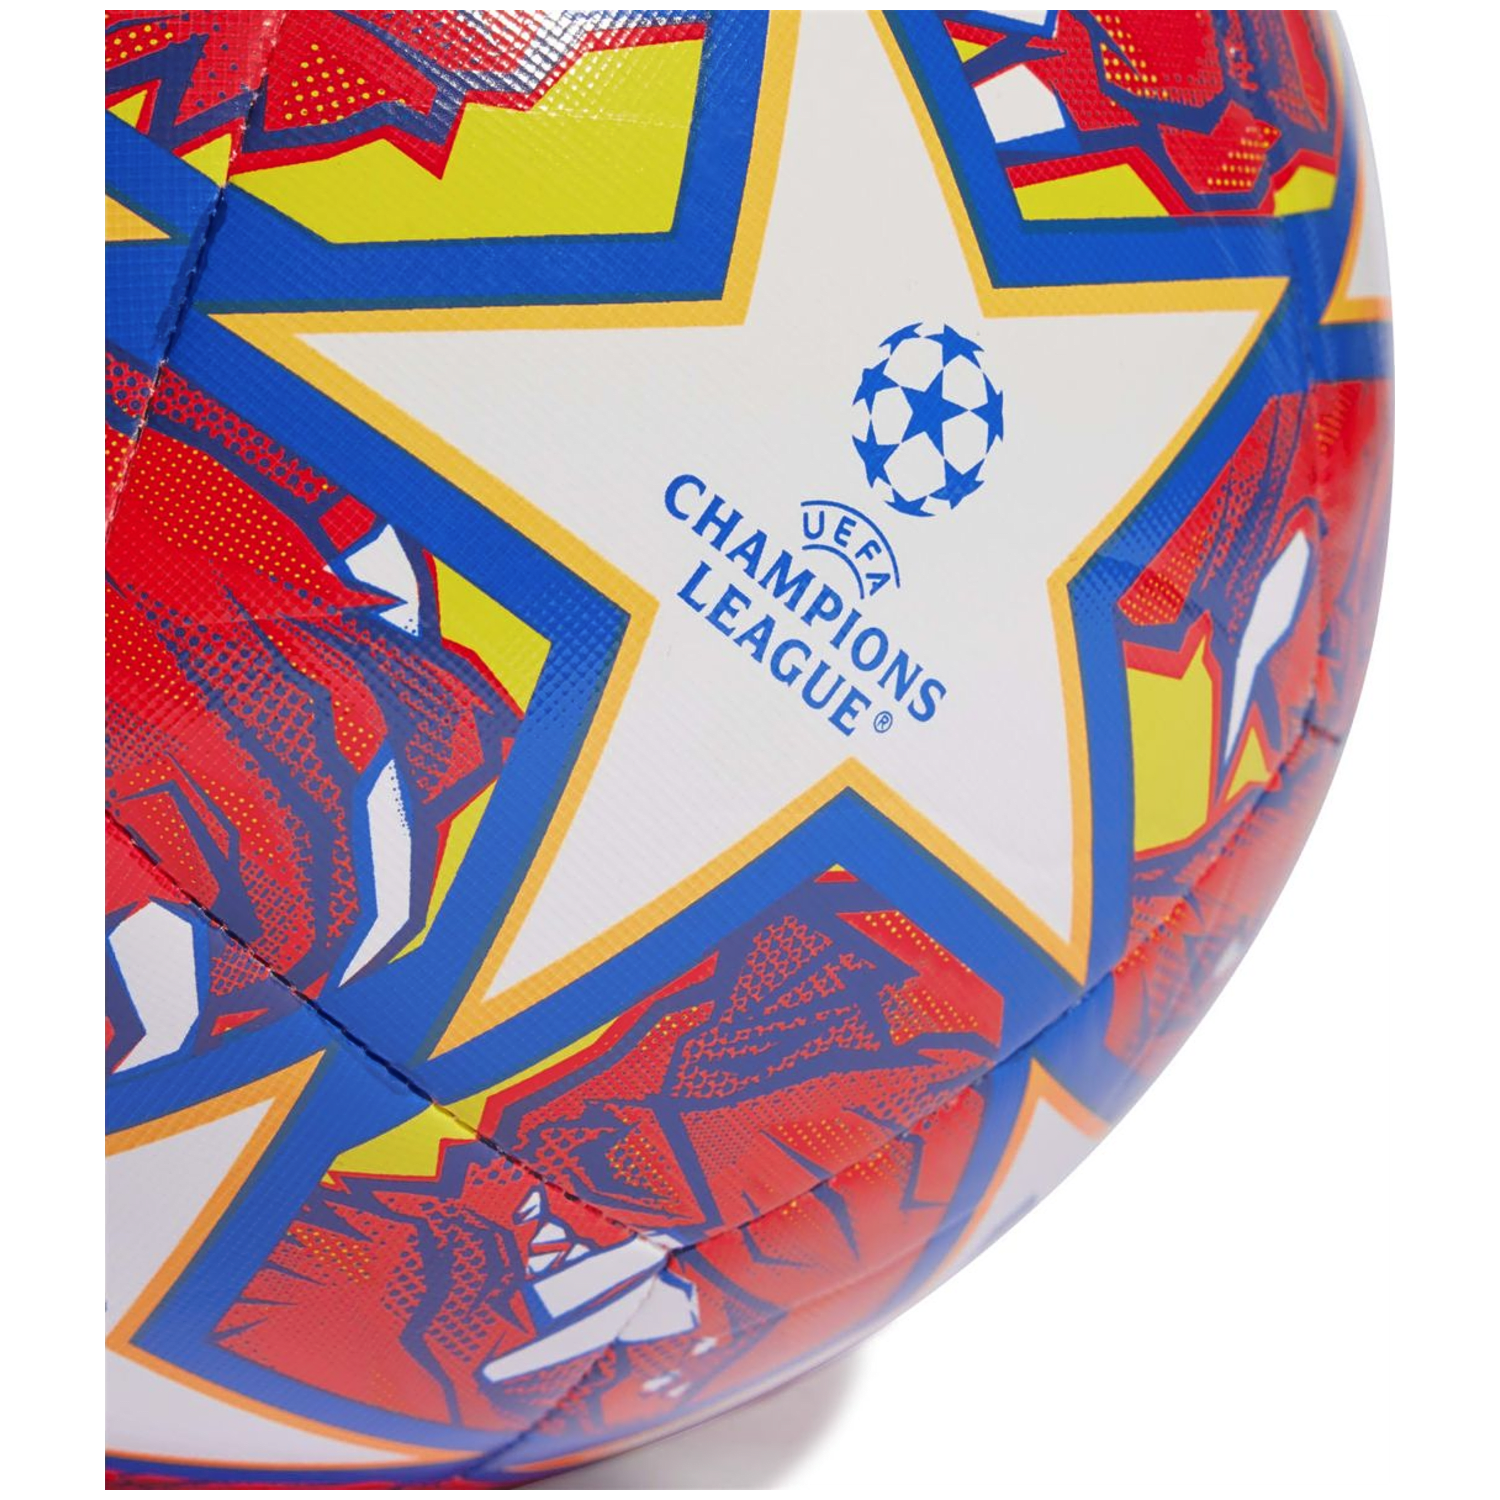 Adidas Uefa Champions League Training Ball Unisex